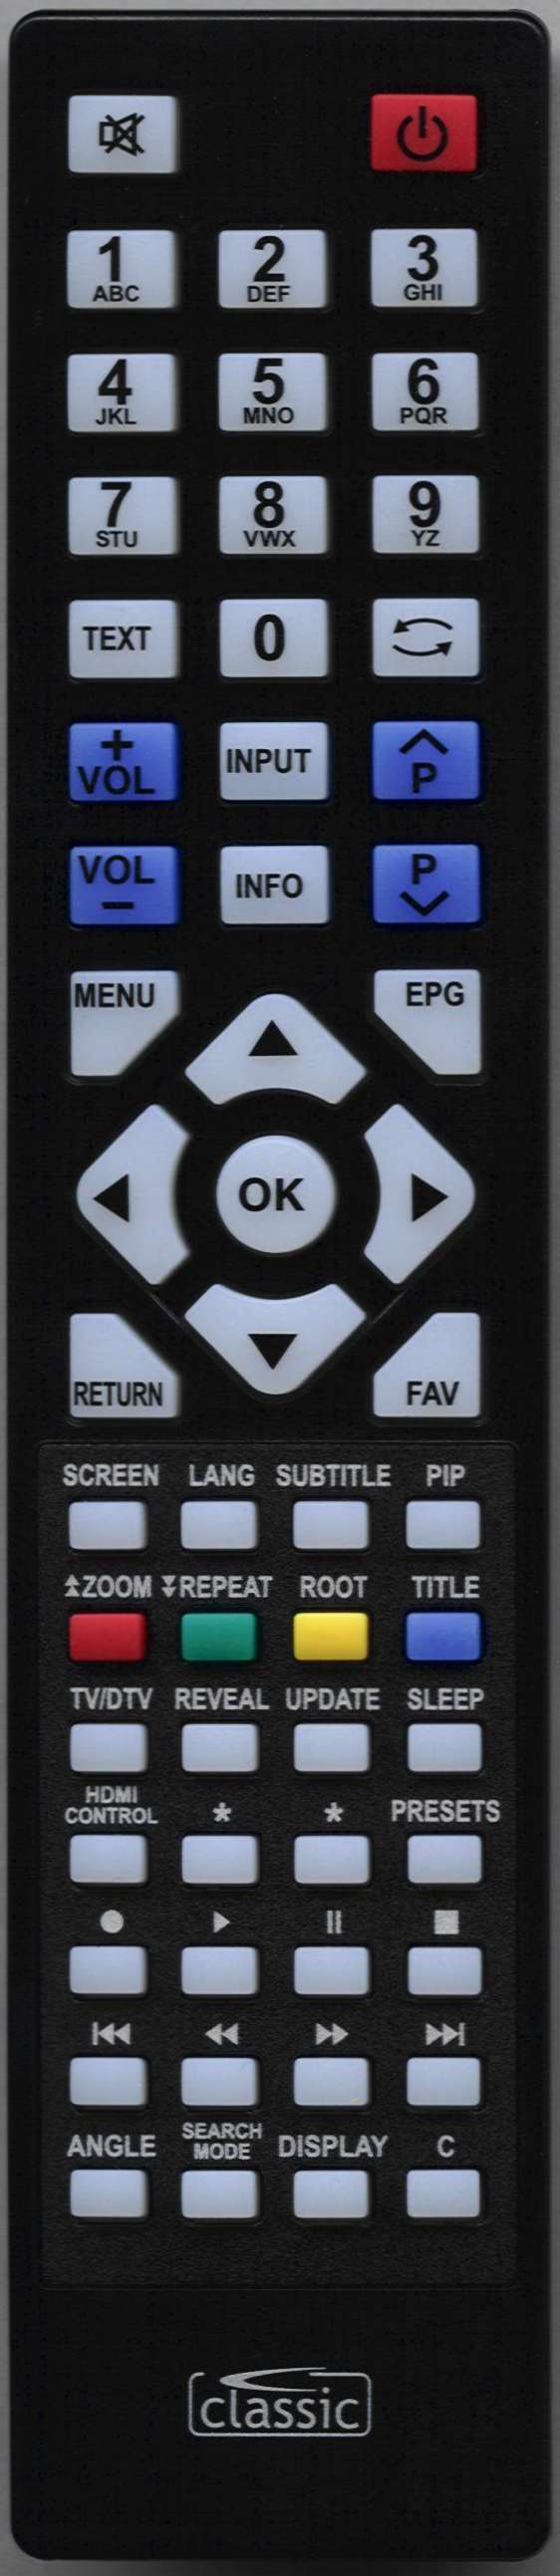 TECHWOOD 19884HDDVD Remote Control Alternative